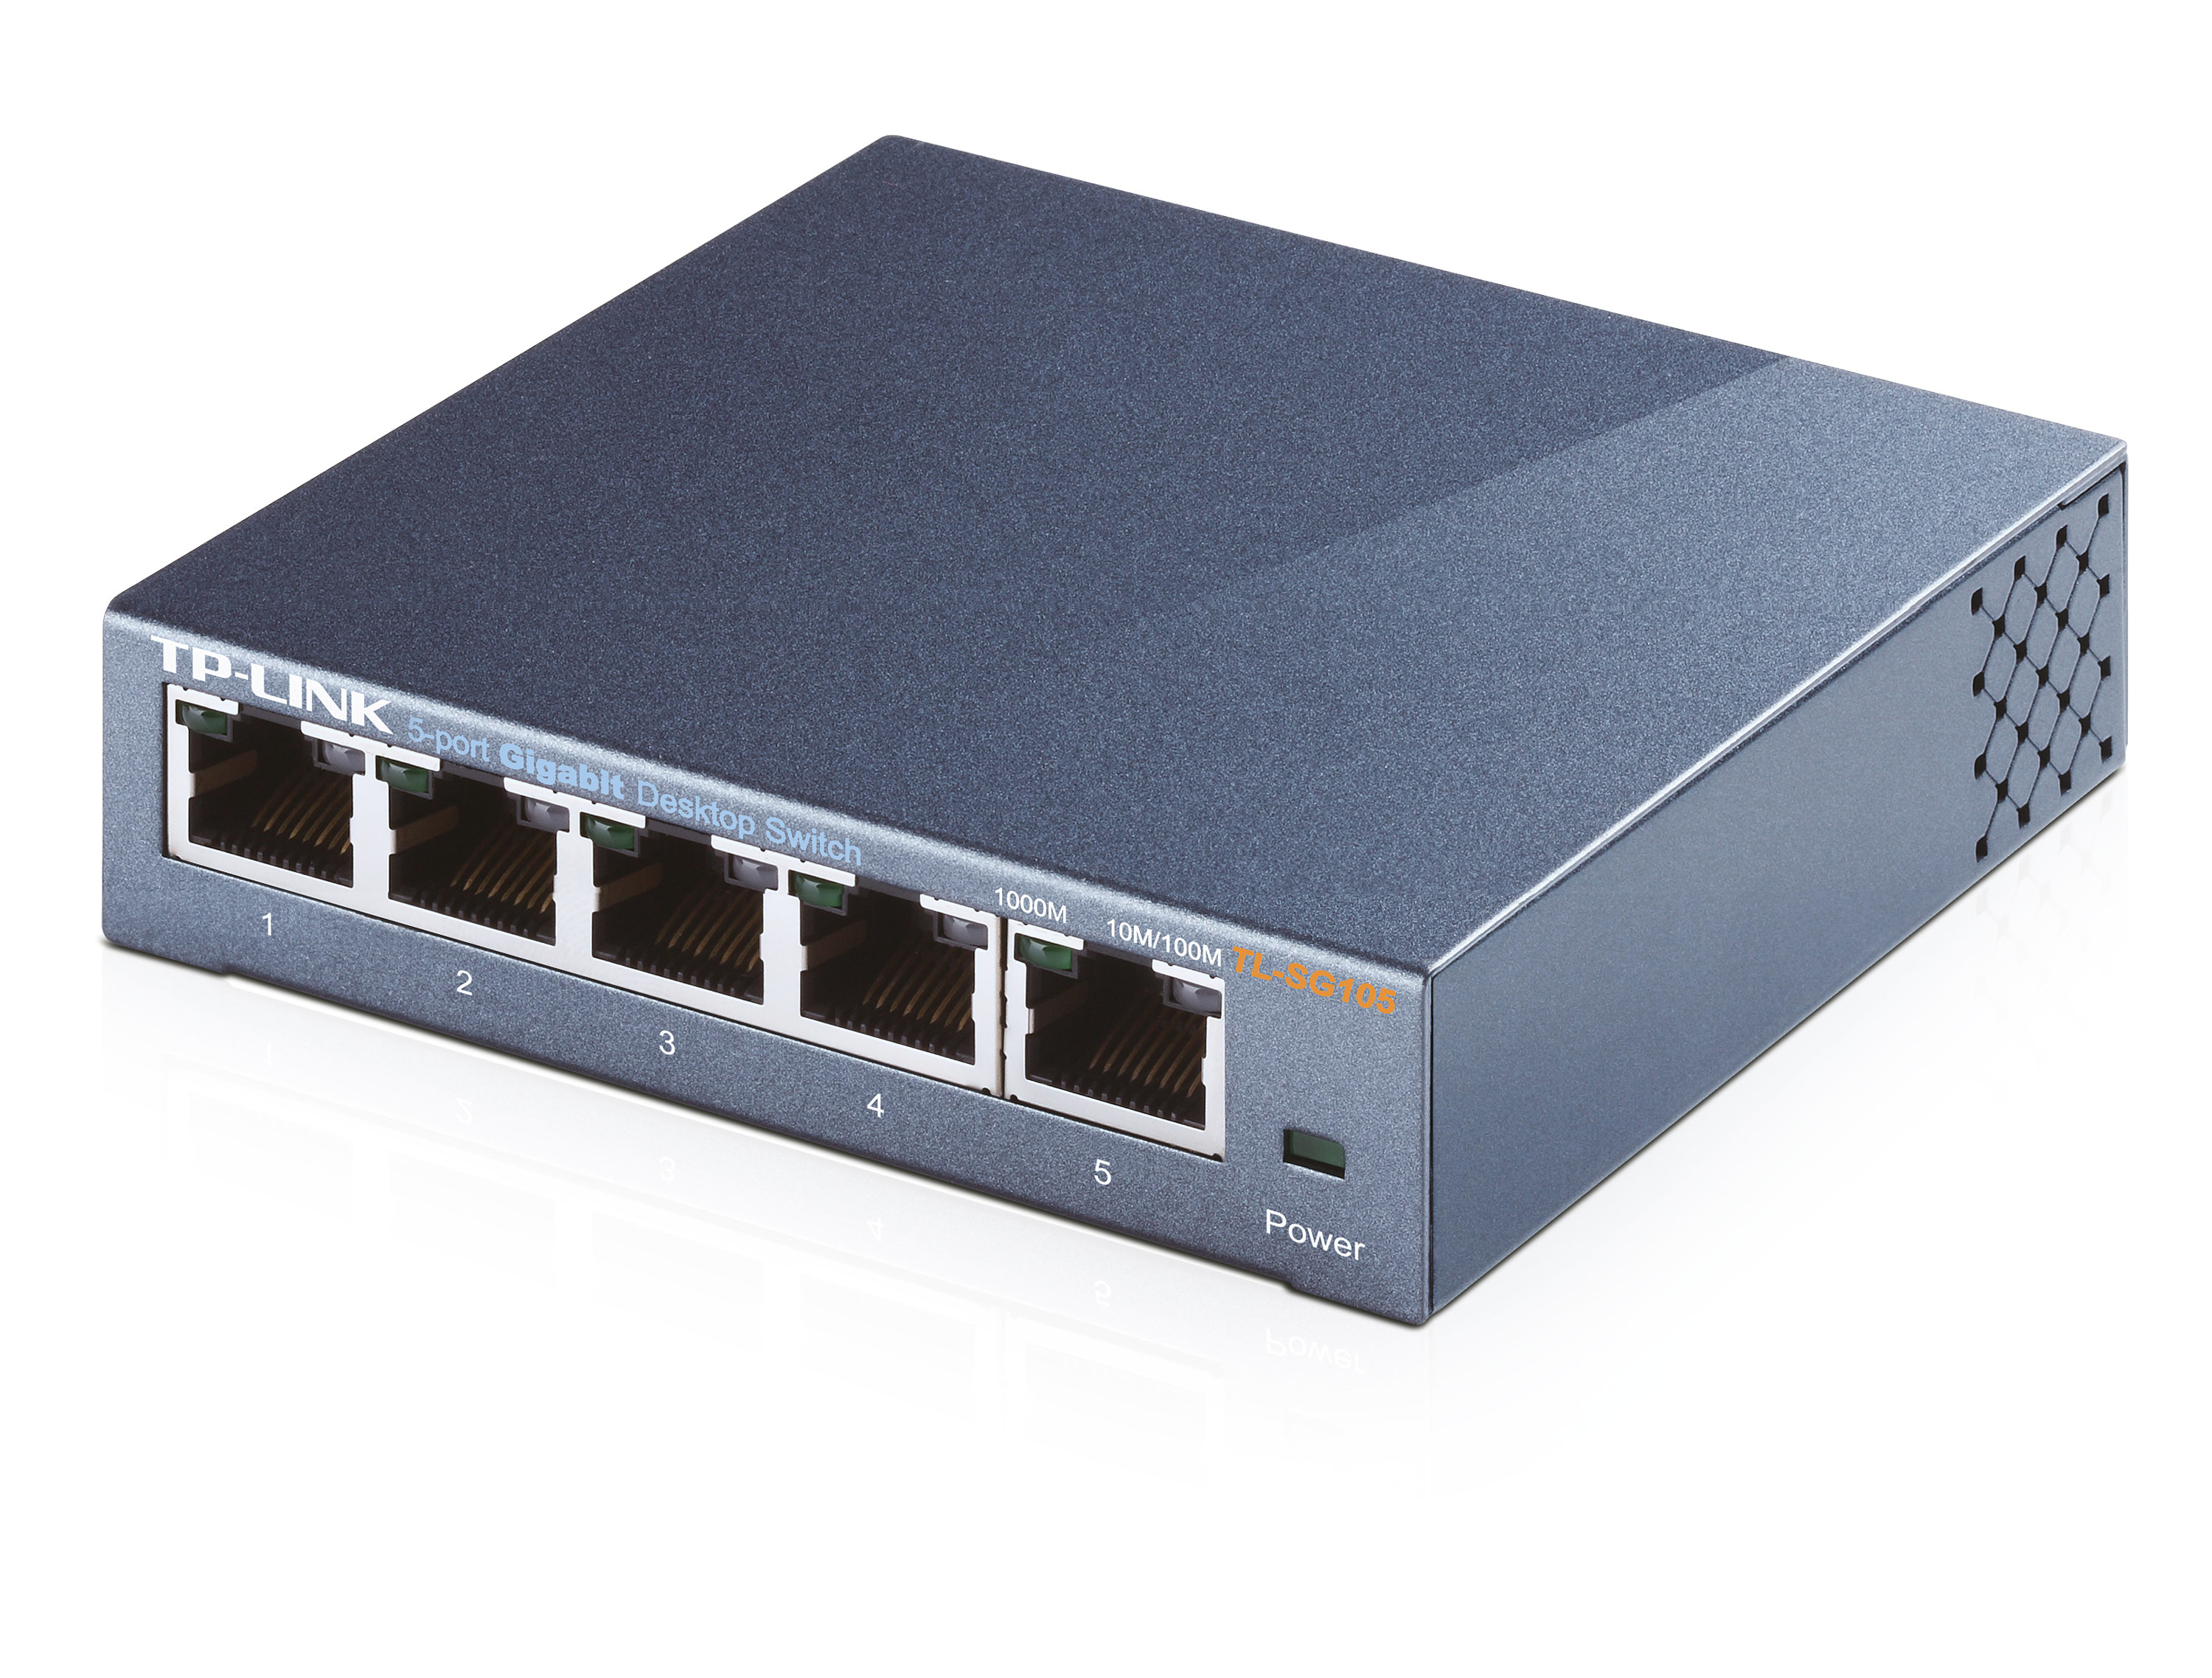 TP-LINK TL-SG105 Switch gigabit 5 ports 10/100/1000Mbps - Boîtier métal .